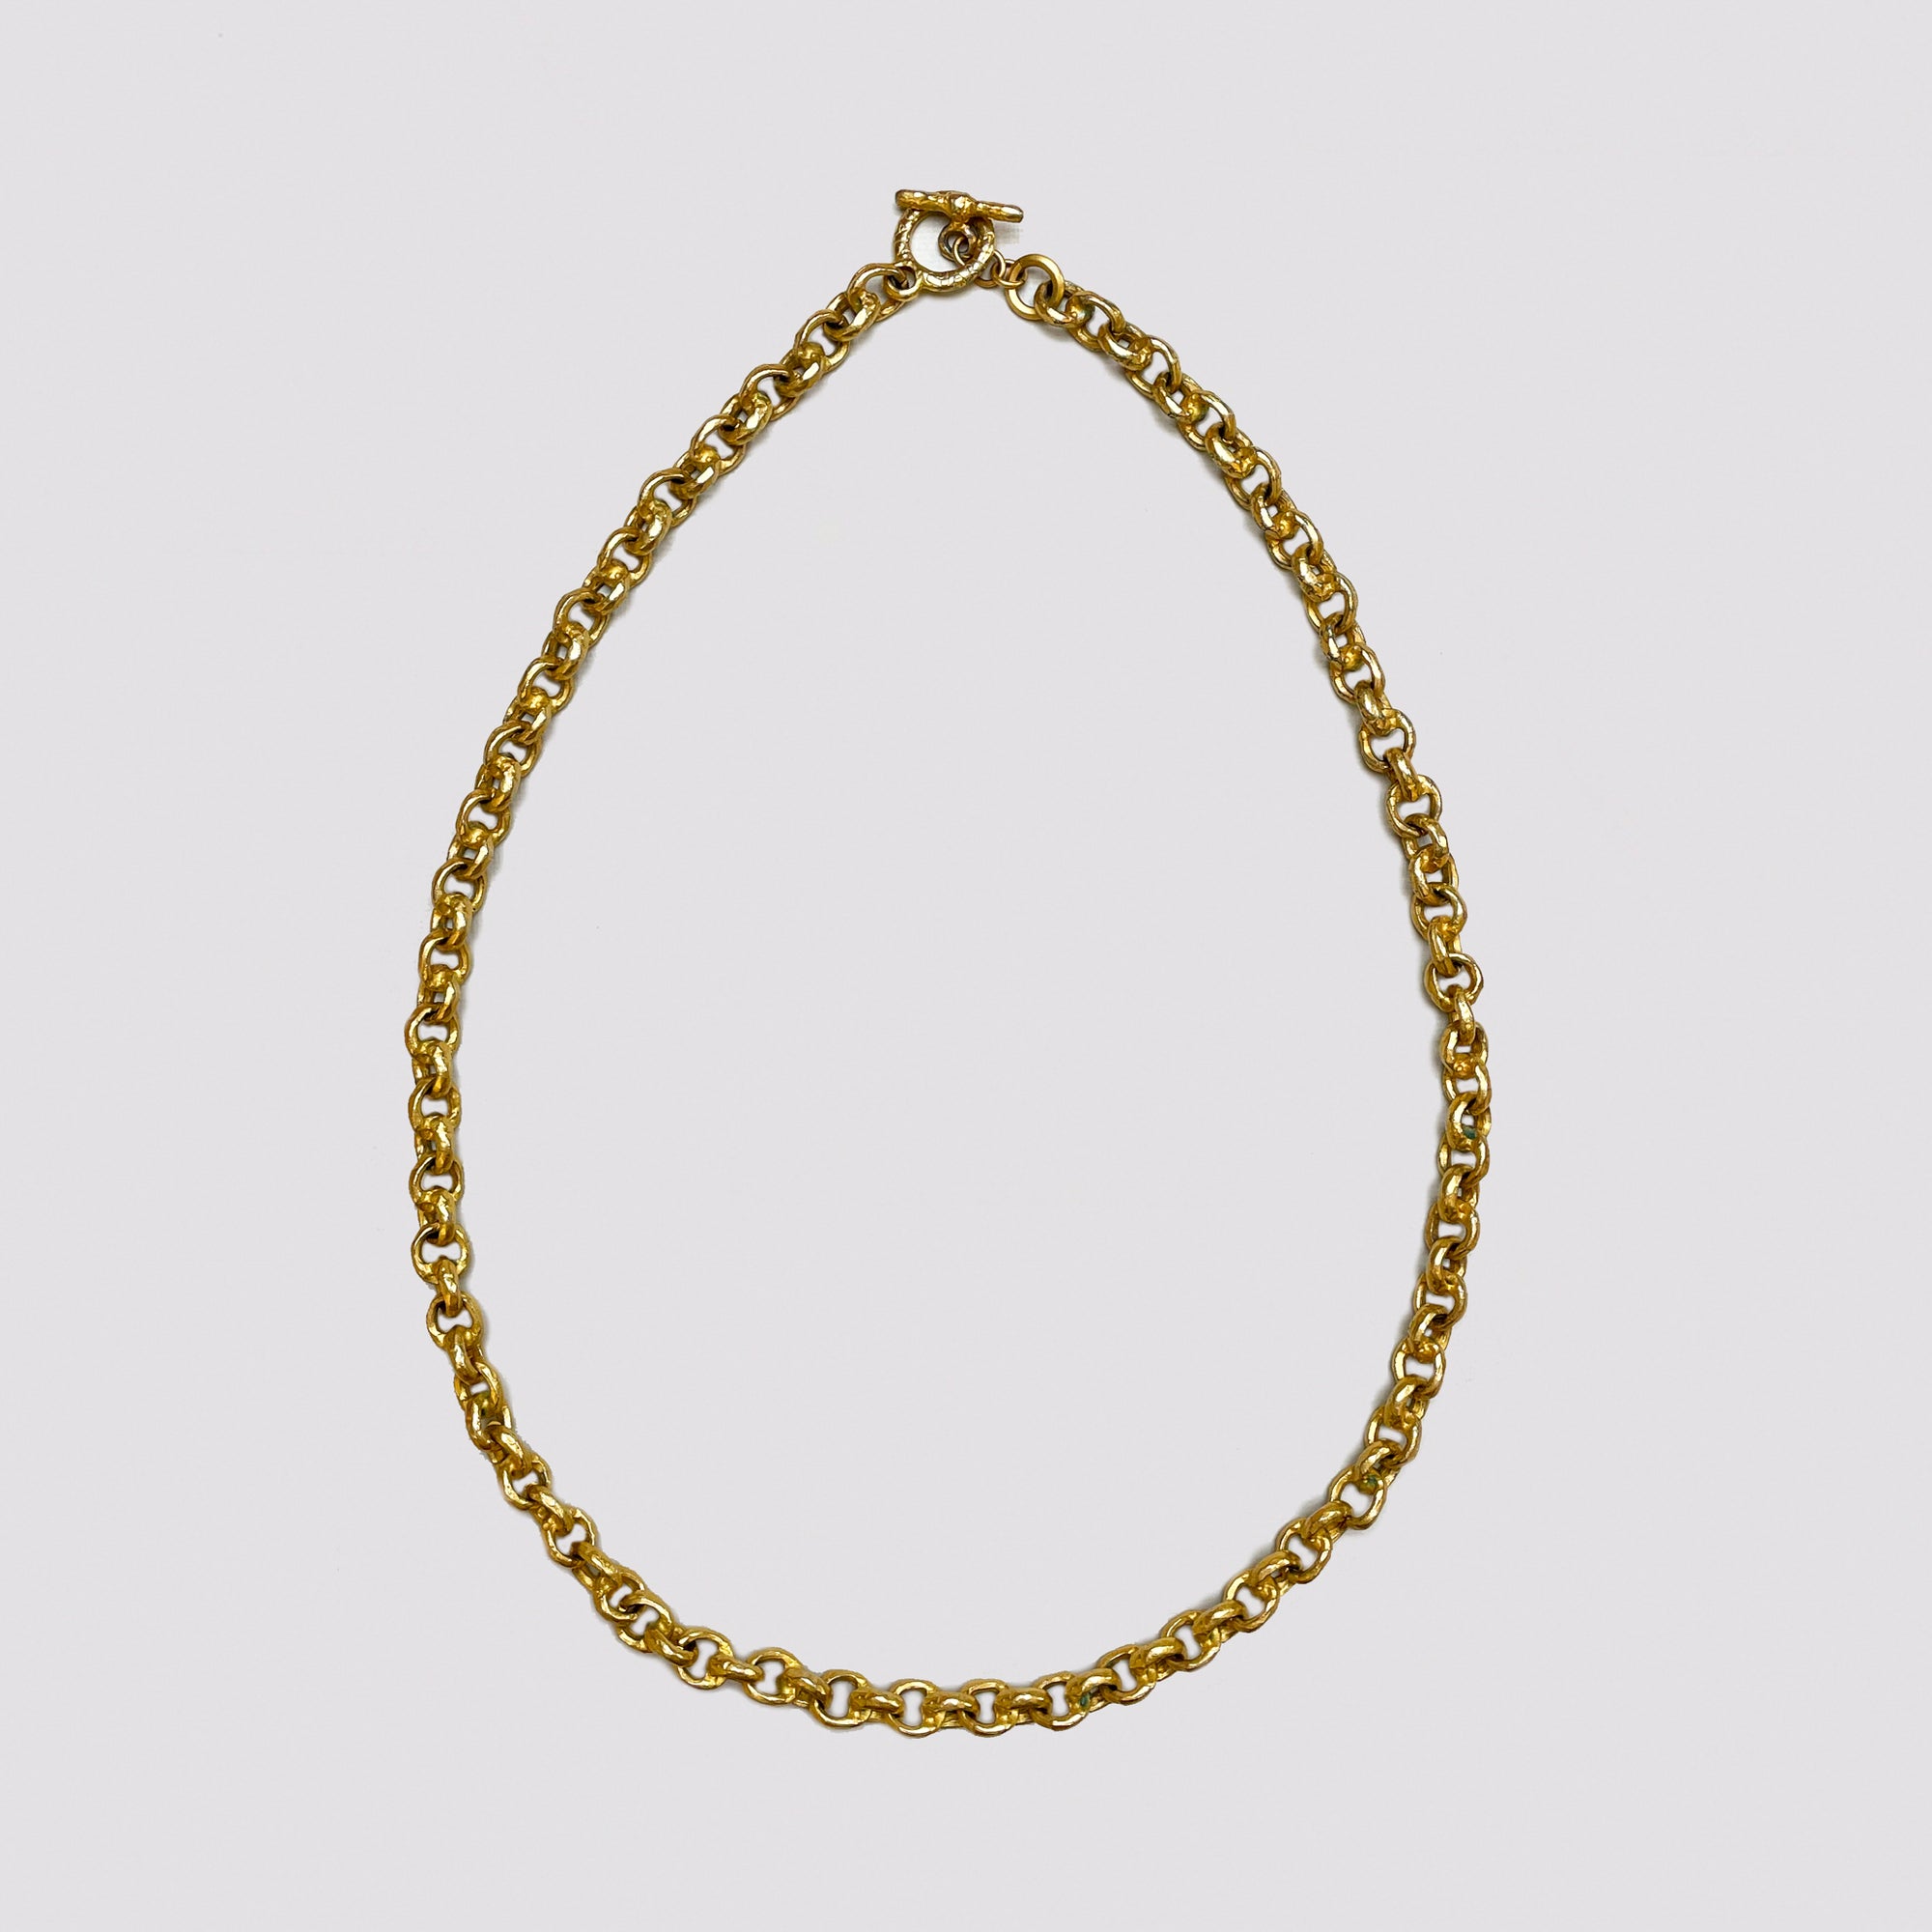 Vintage Charles Jourdan Textured Gold Chain Necklace